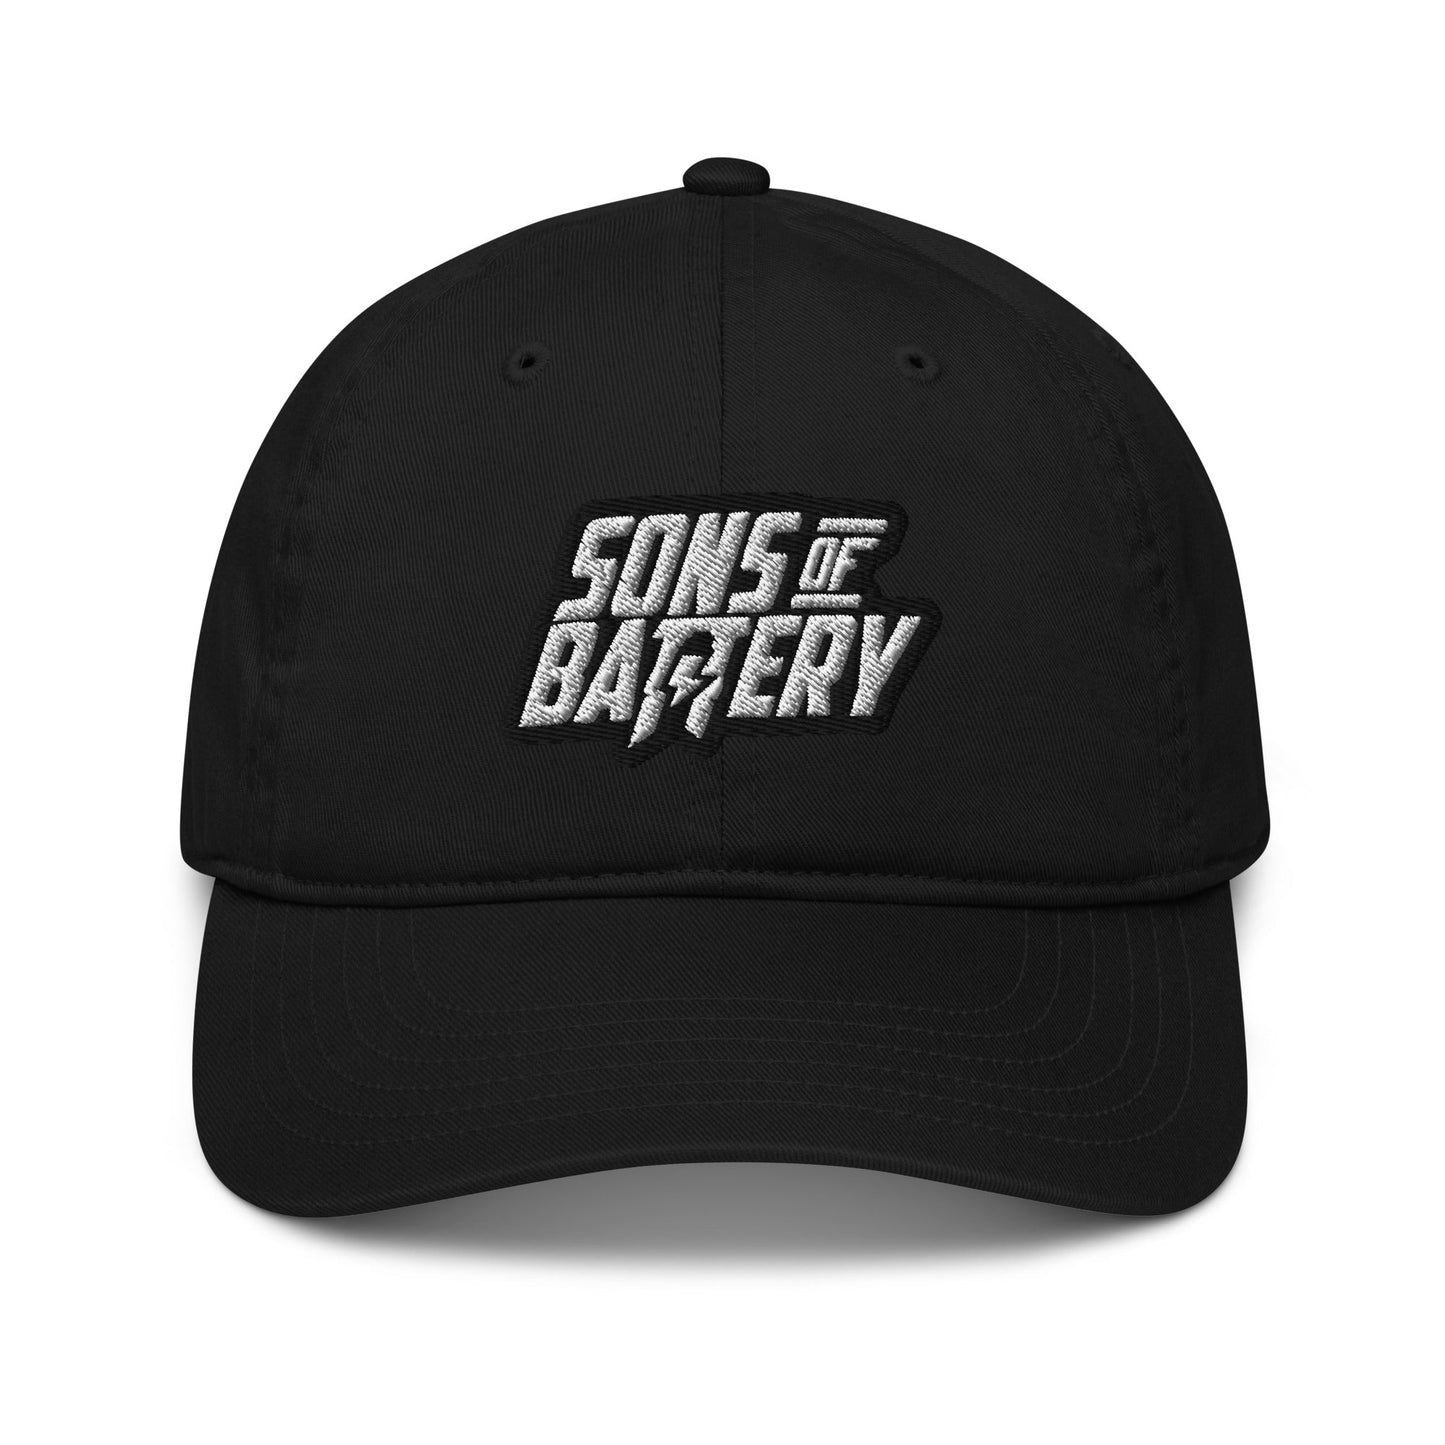 Sons of Battery® - E-MTB Brand & Community Schwarz Bestickte BOLD Cap zum einstellen E-Bike-Community